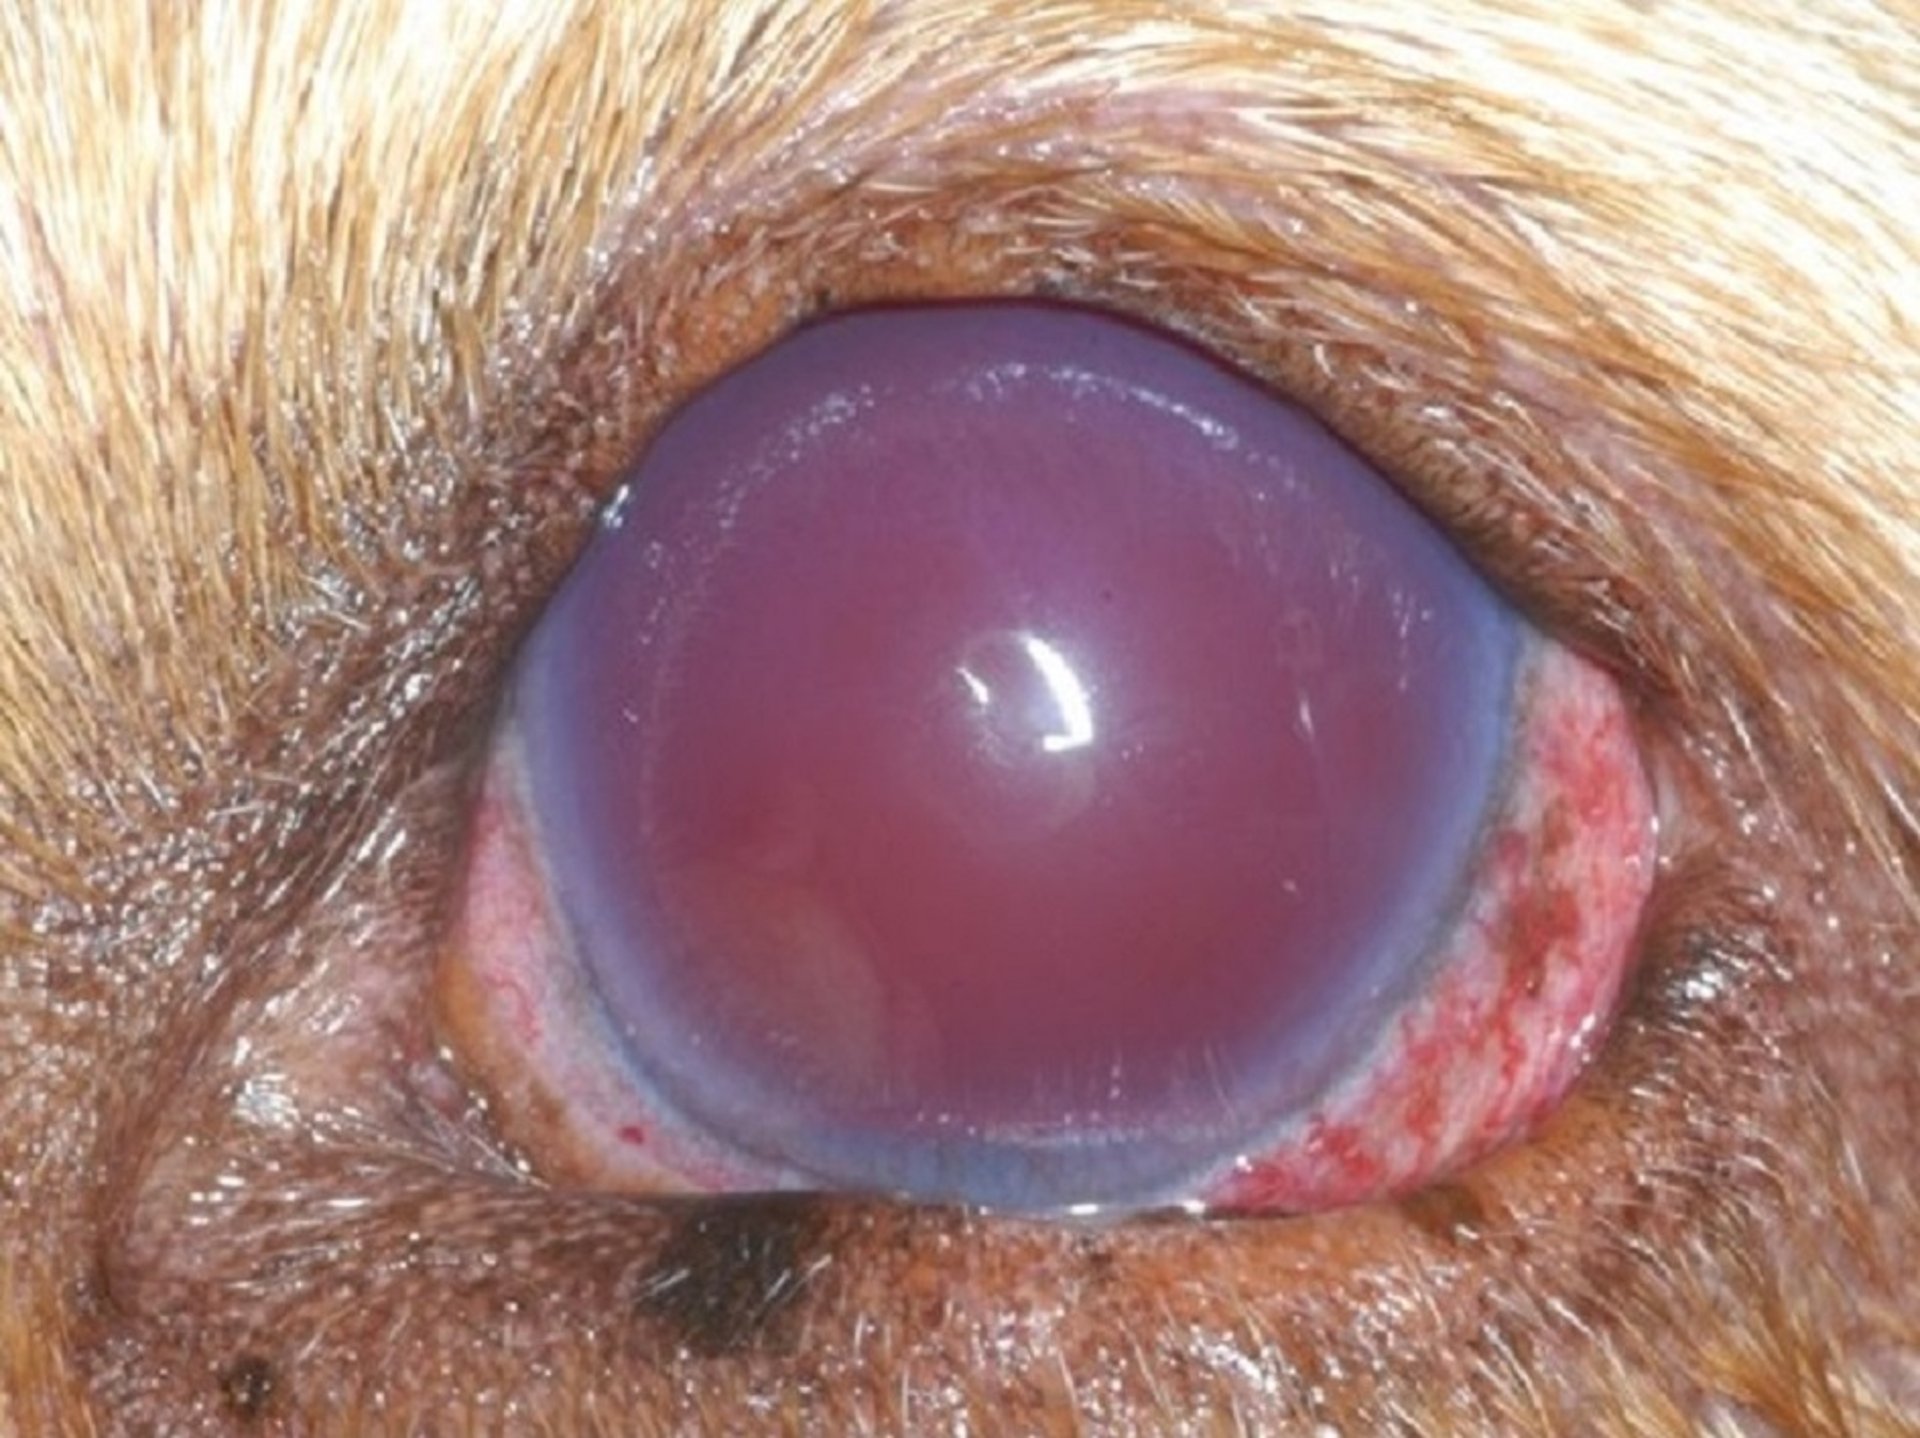 Hyphema secondary to intraocular disease, dog